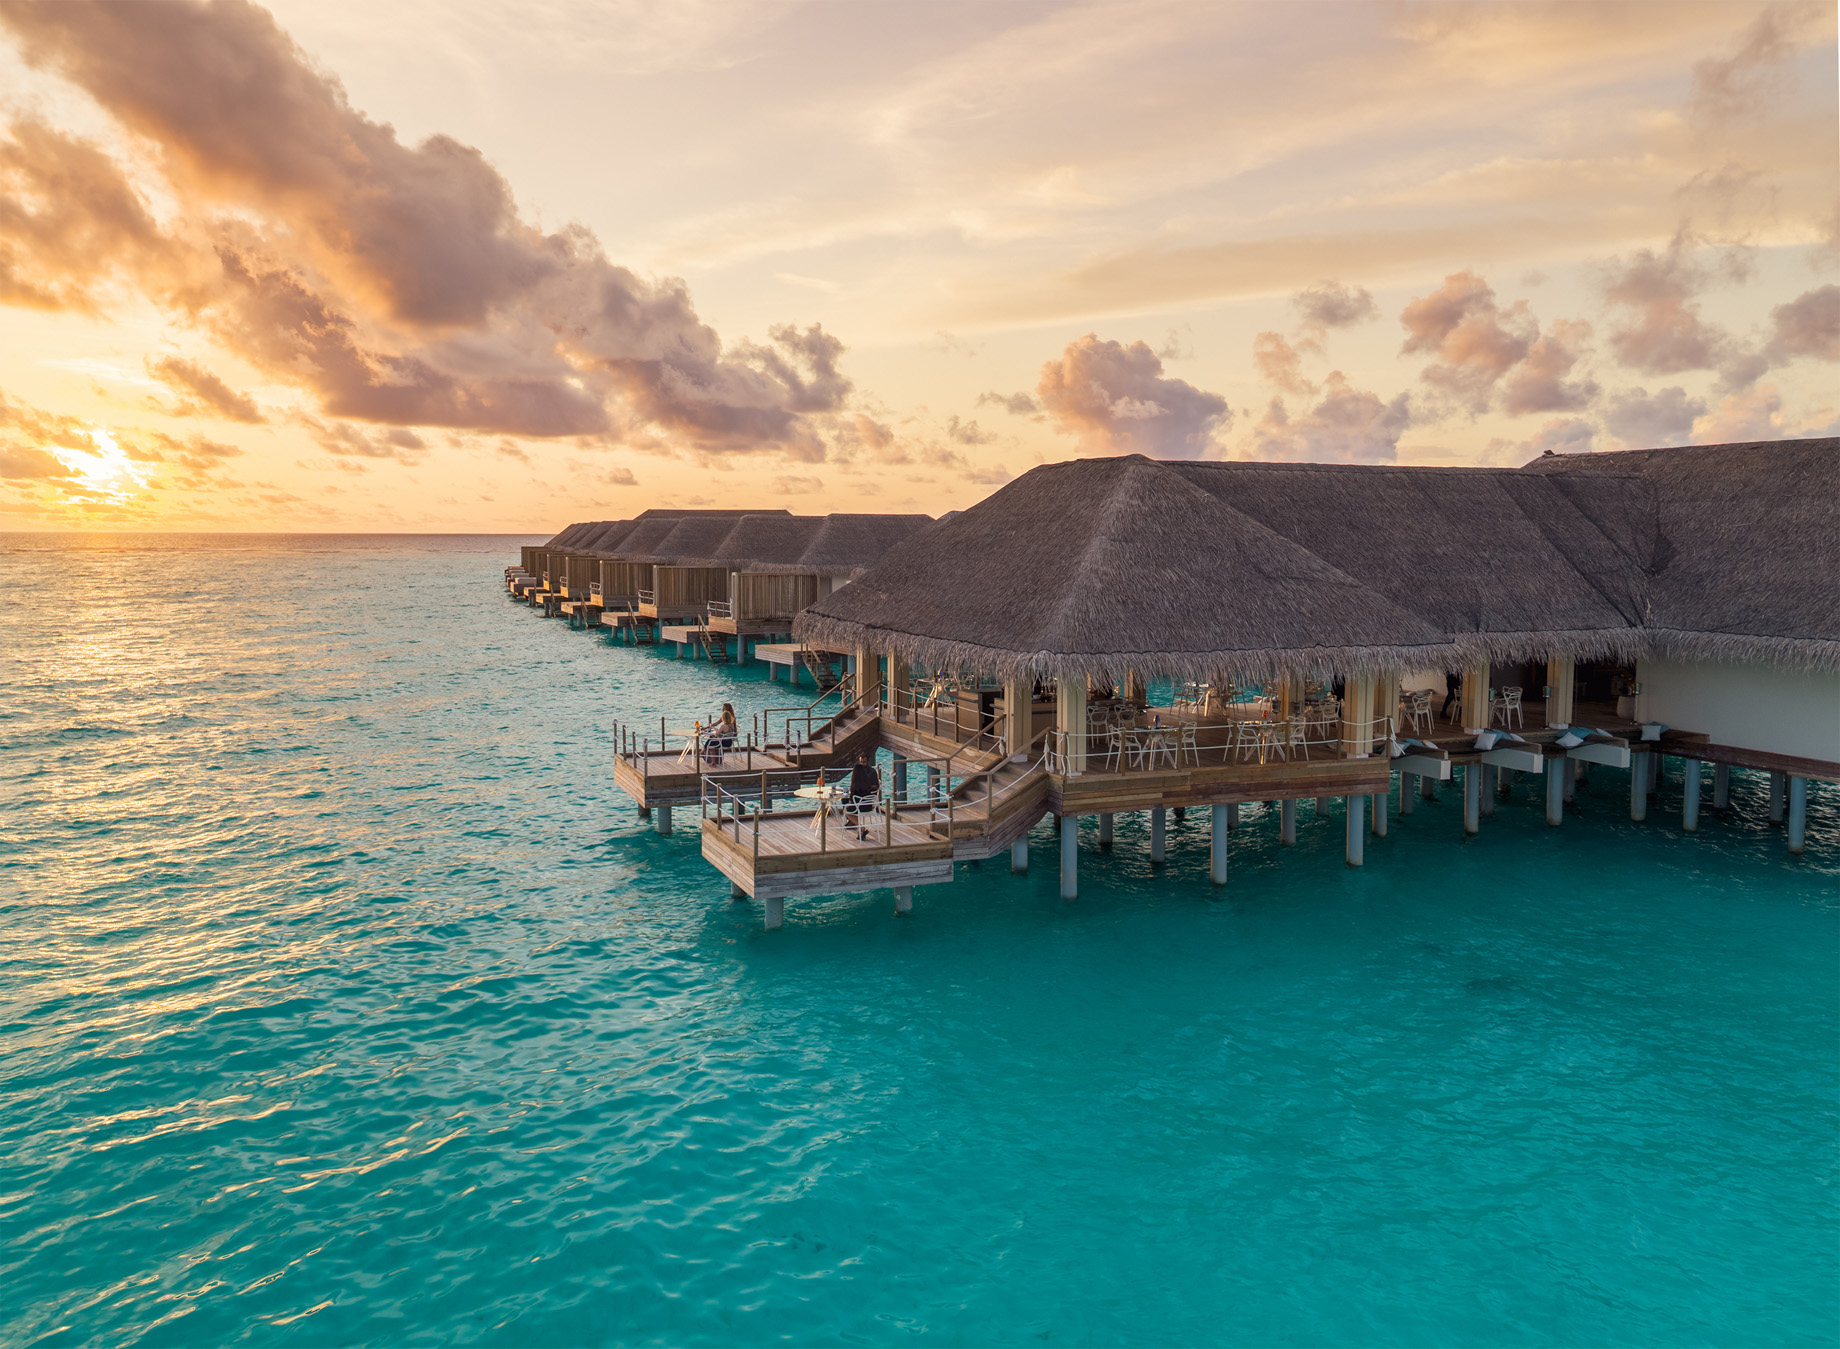 Baglioni Resort Maldives – Maagau Island, Rinbudhoo, Maldives – Umami Restaurant Exterior Sunset Ocean View